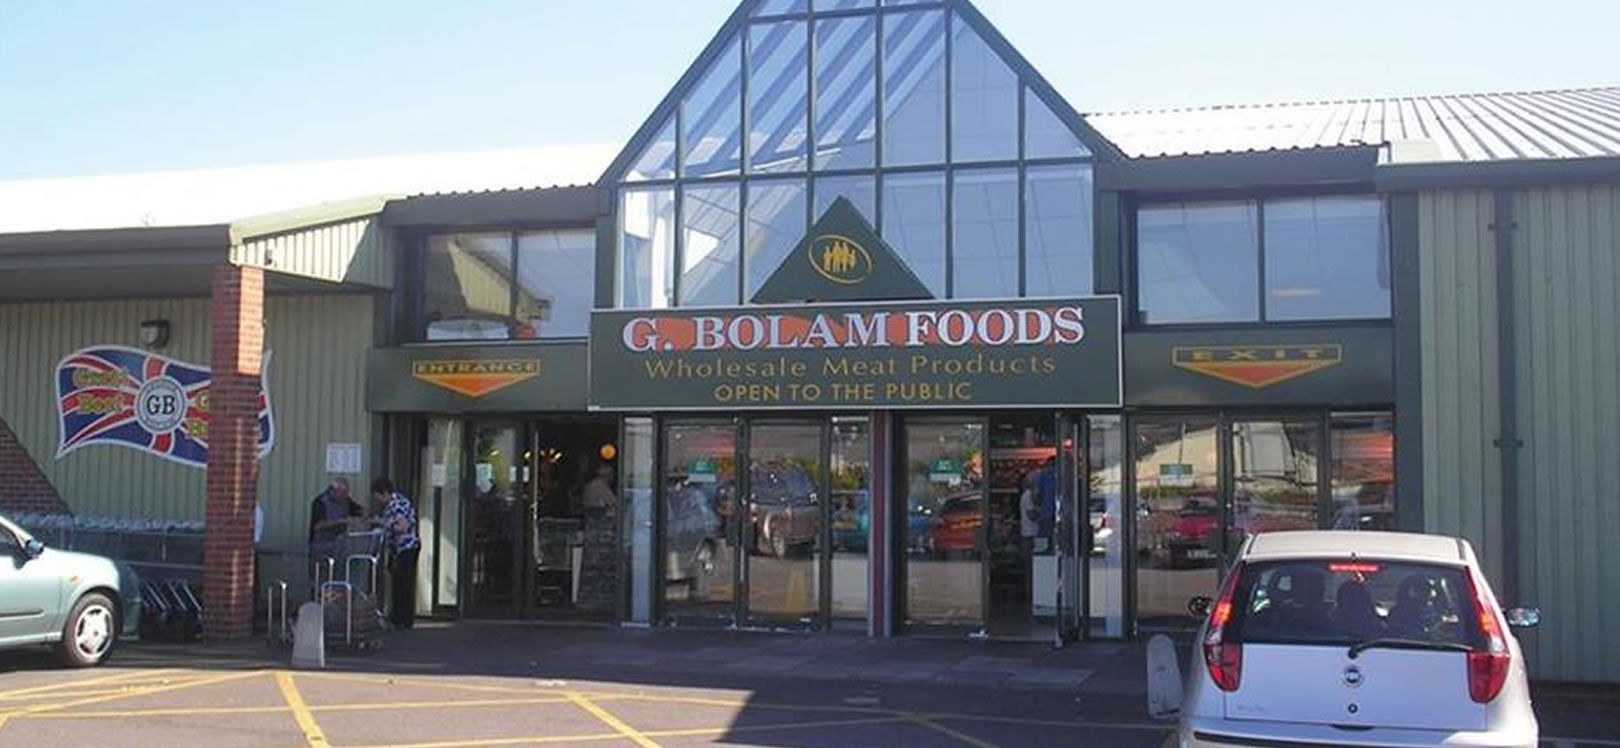 George Bolam Foods Ltd